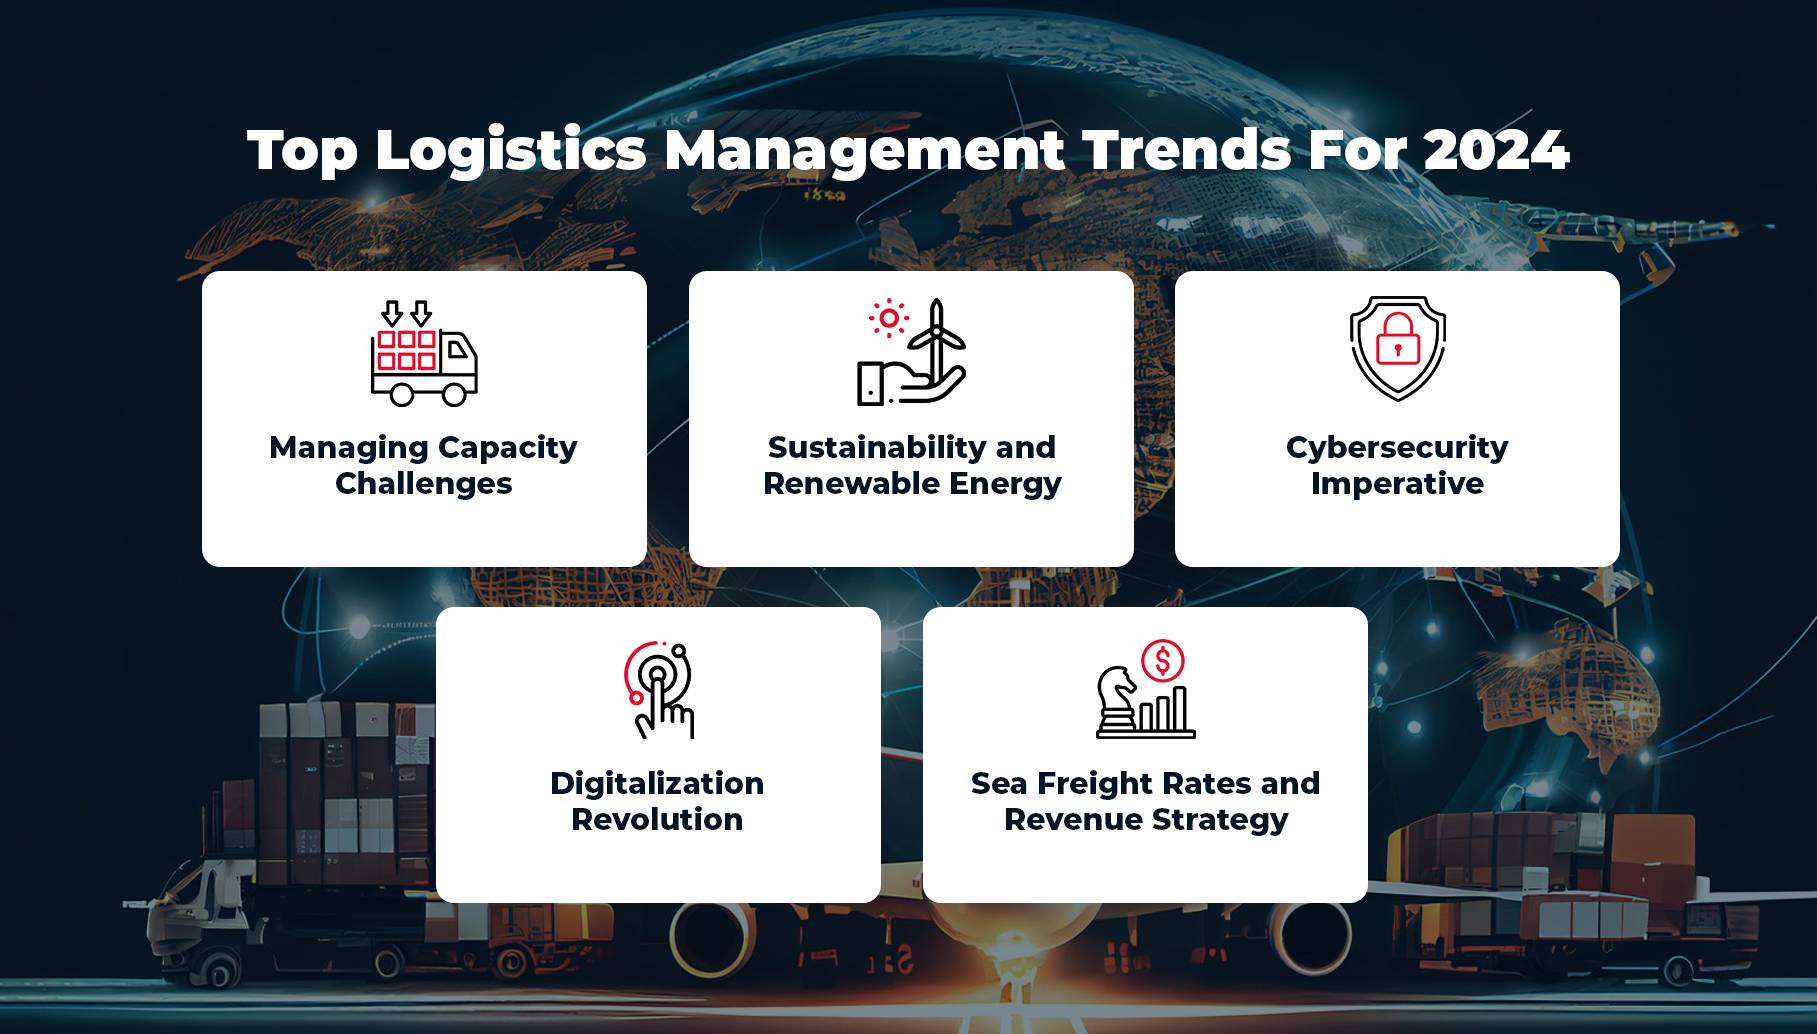 Top 5 Logistics Management Trends For 2024